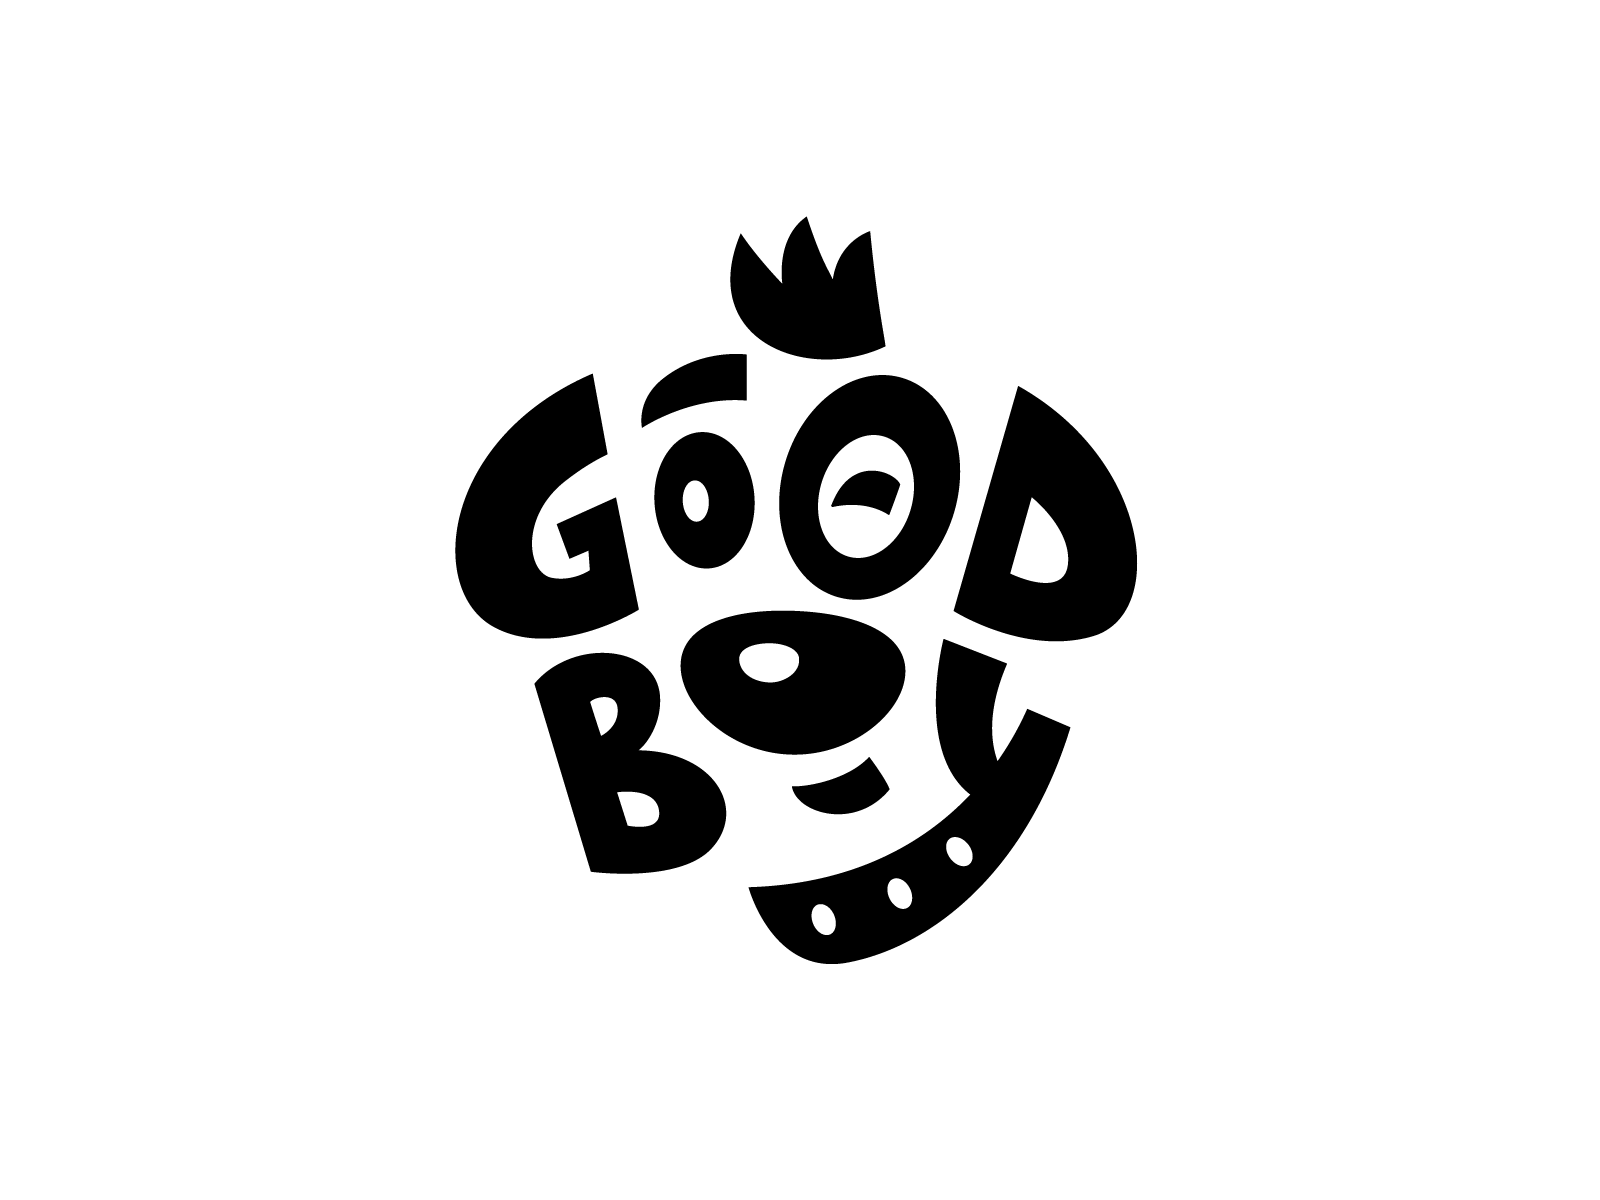 Good Boy logo by Dima Je on Dribbble